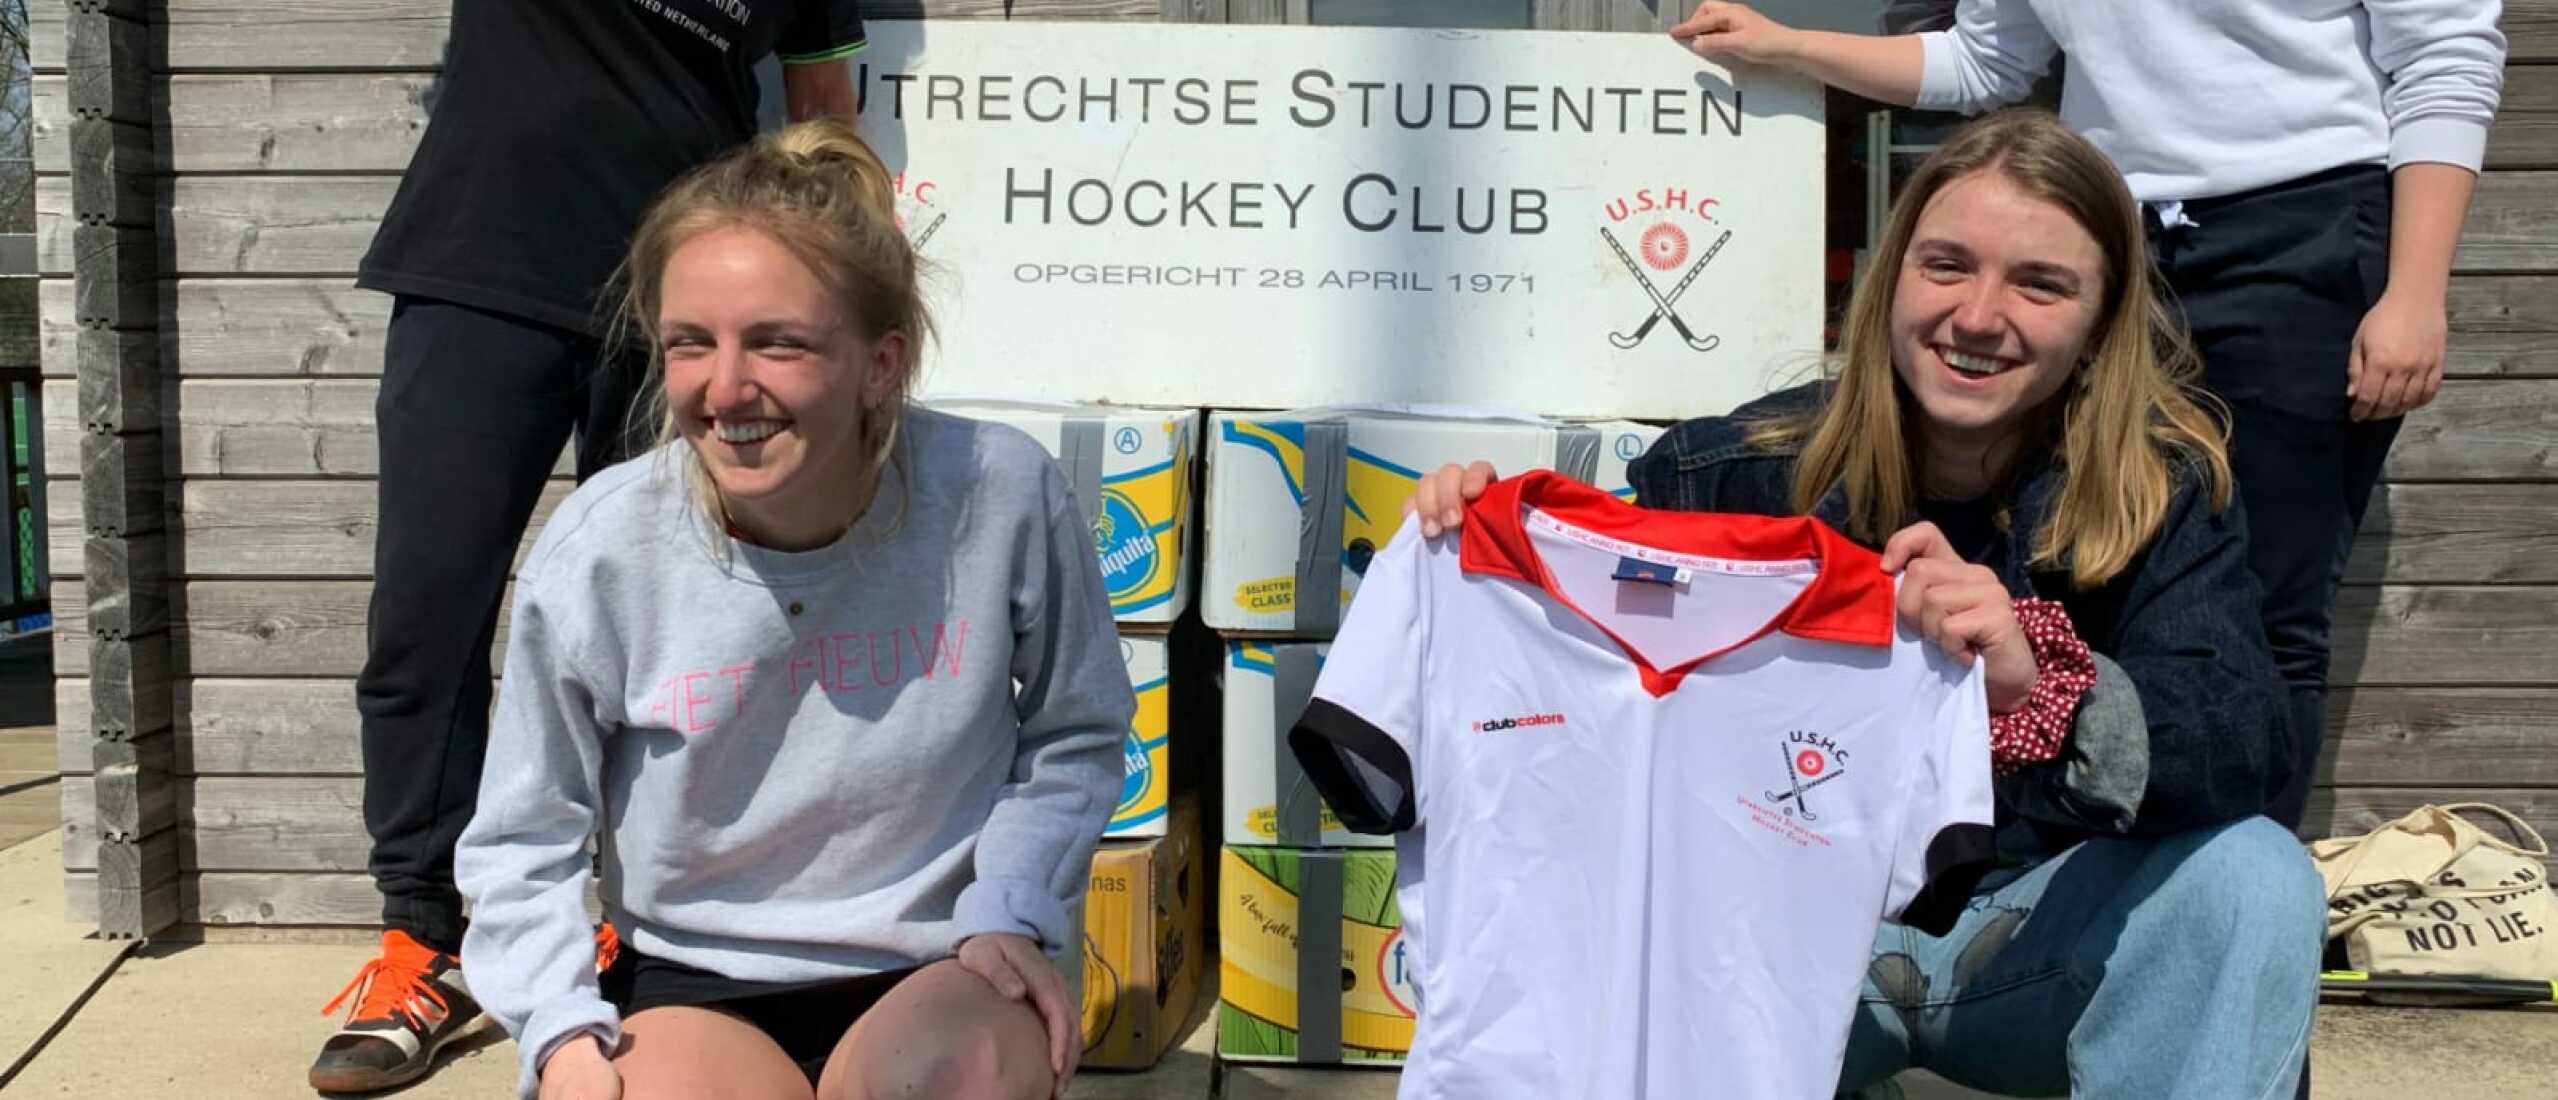 Utrechtse Studenten Hockey Club doneert 250 shirts